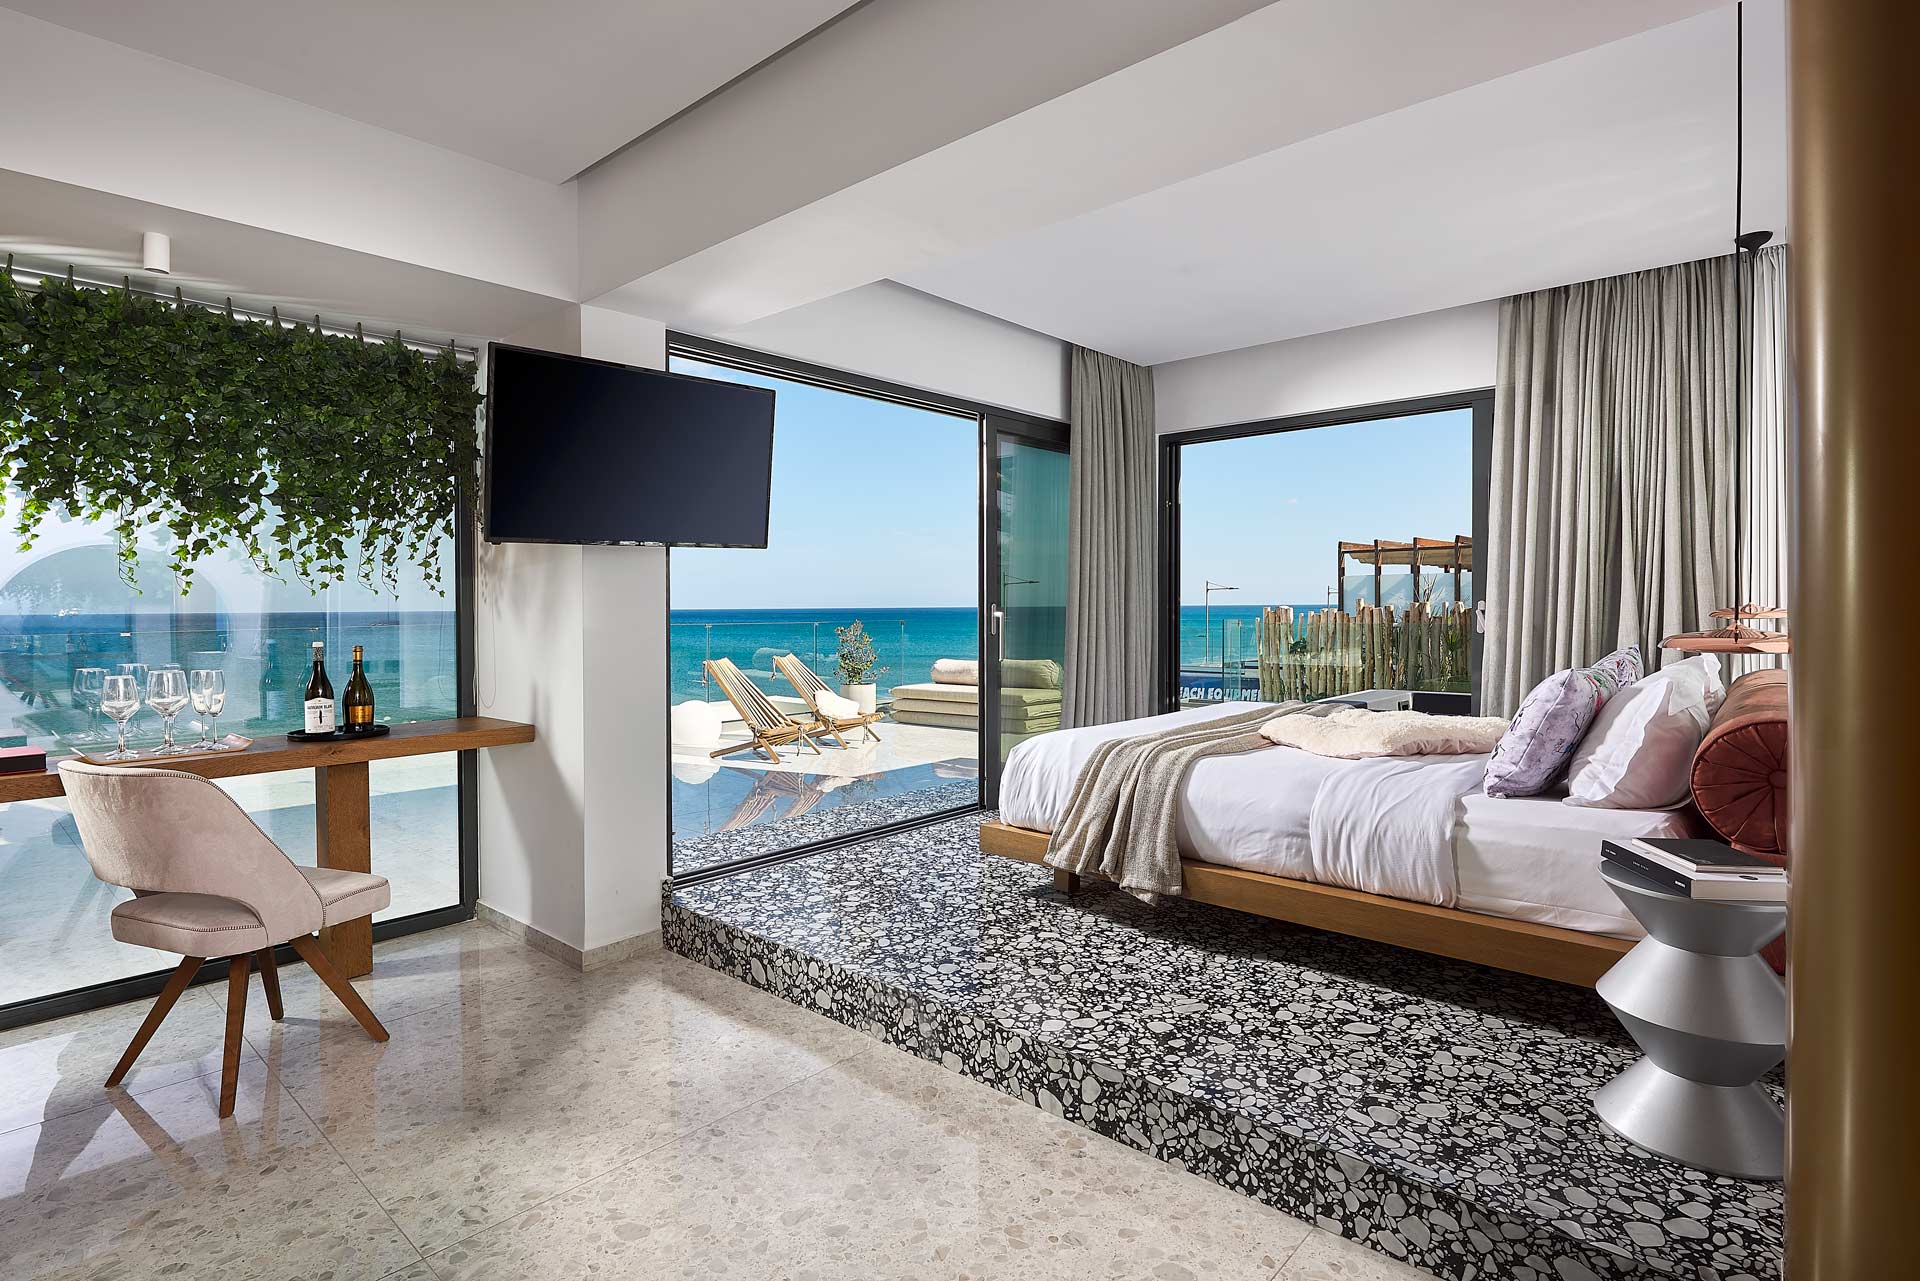 Dyo Suites Luxury Boutique Hotel Rethymno Crete - Titanium Suite